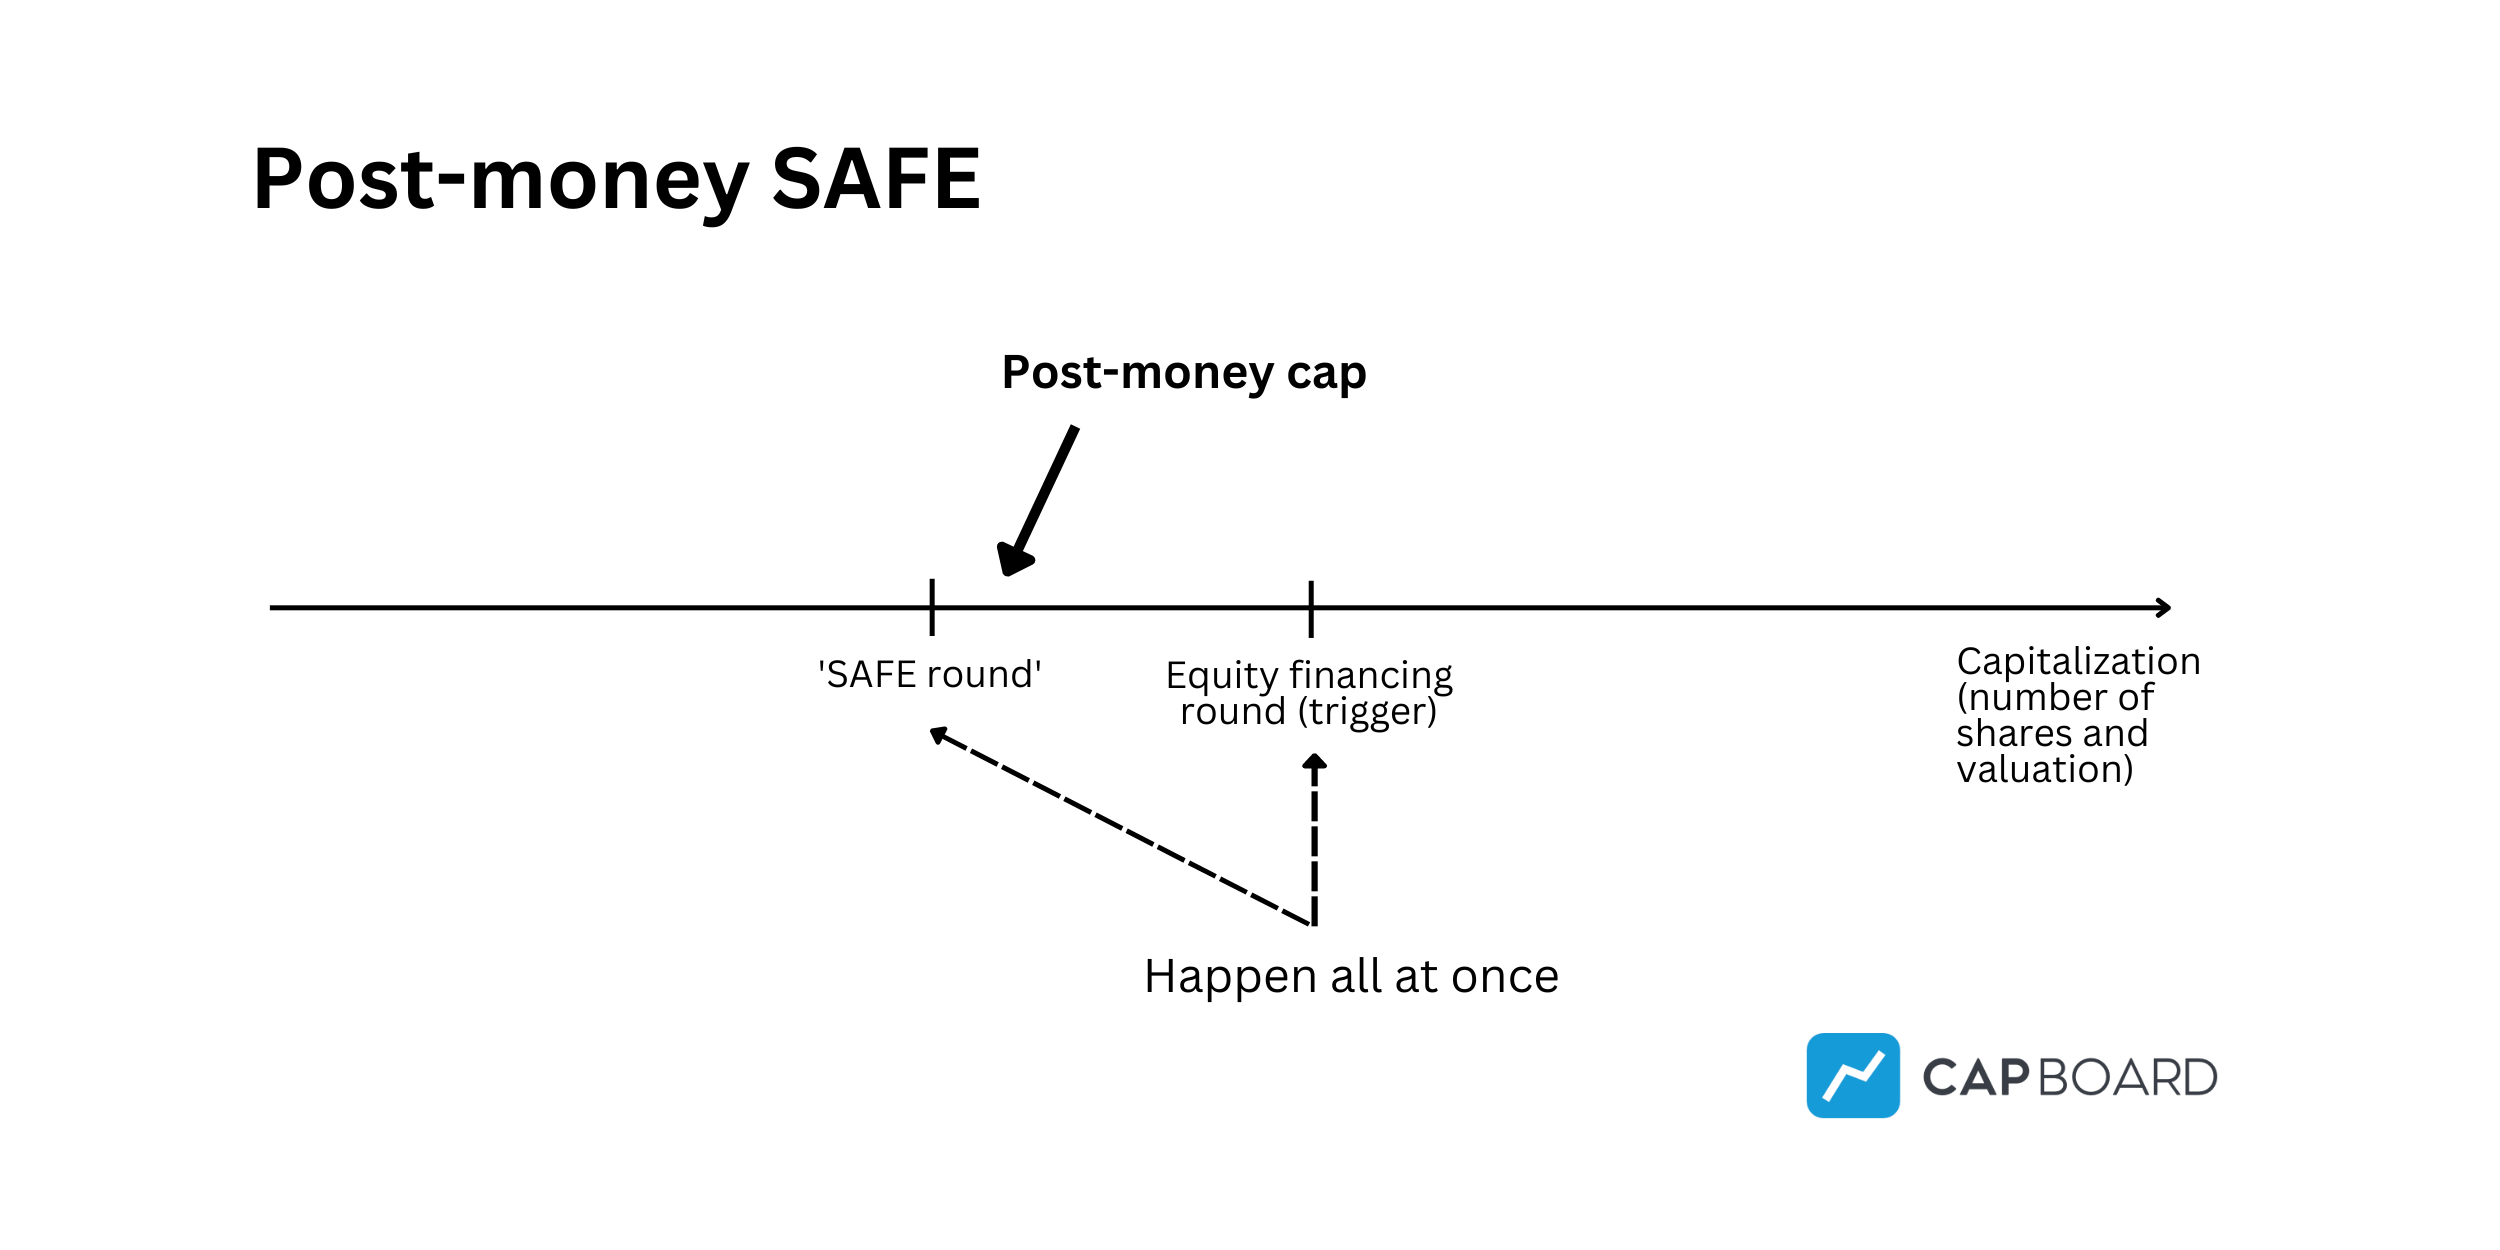 Post-money SAFE